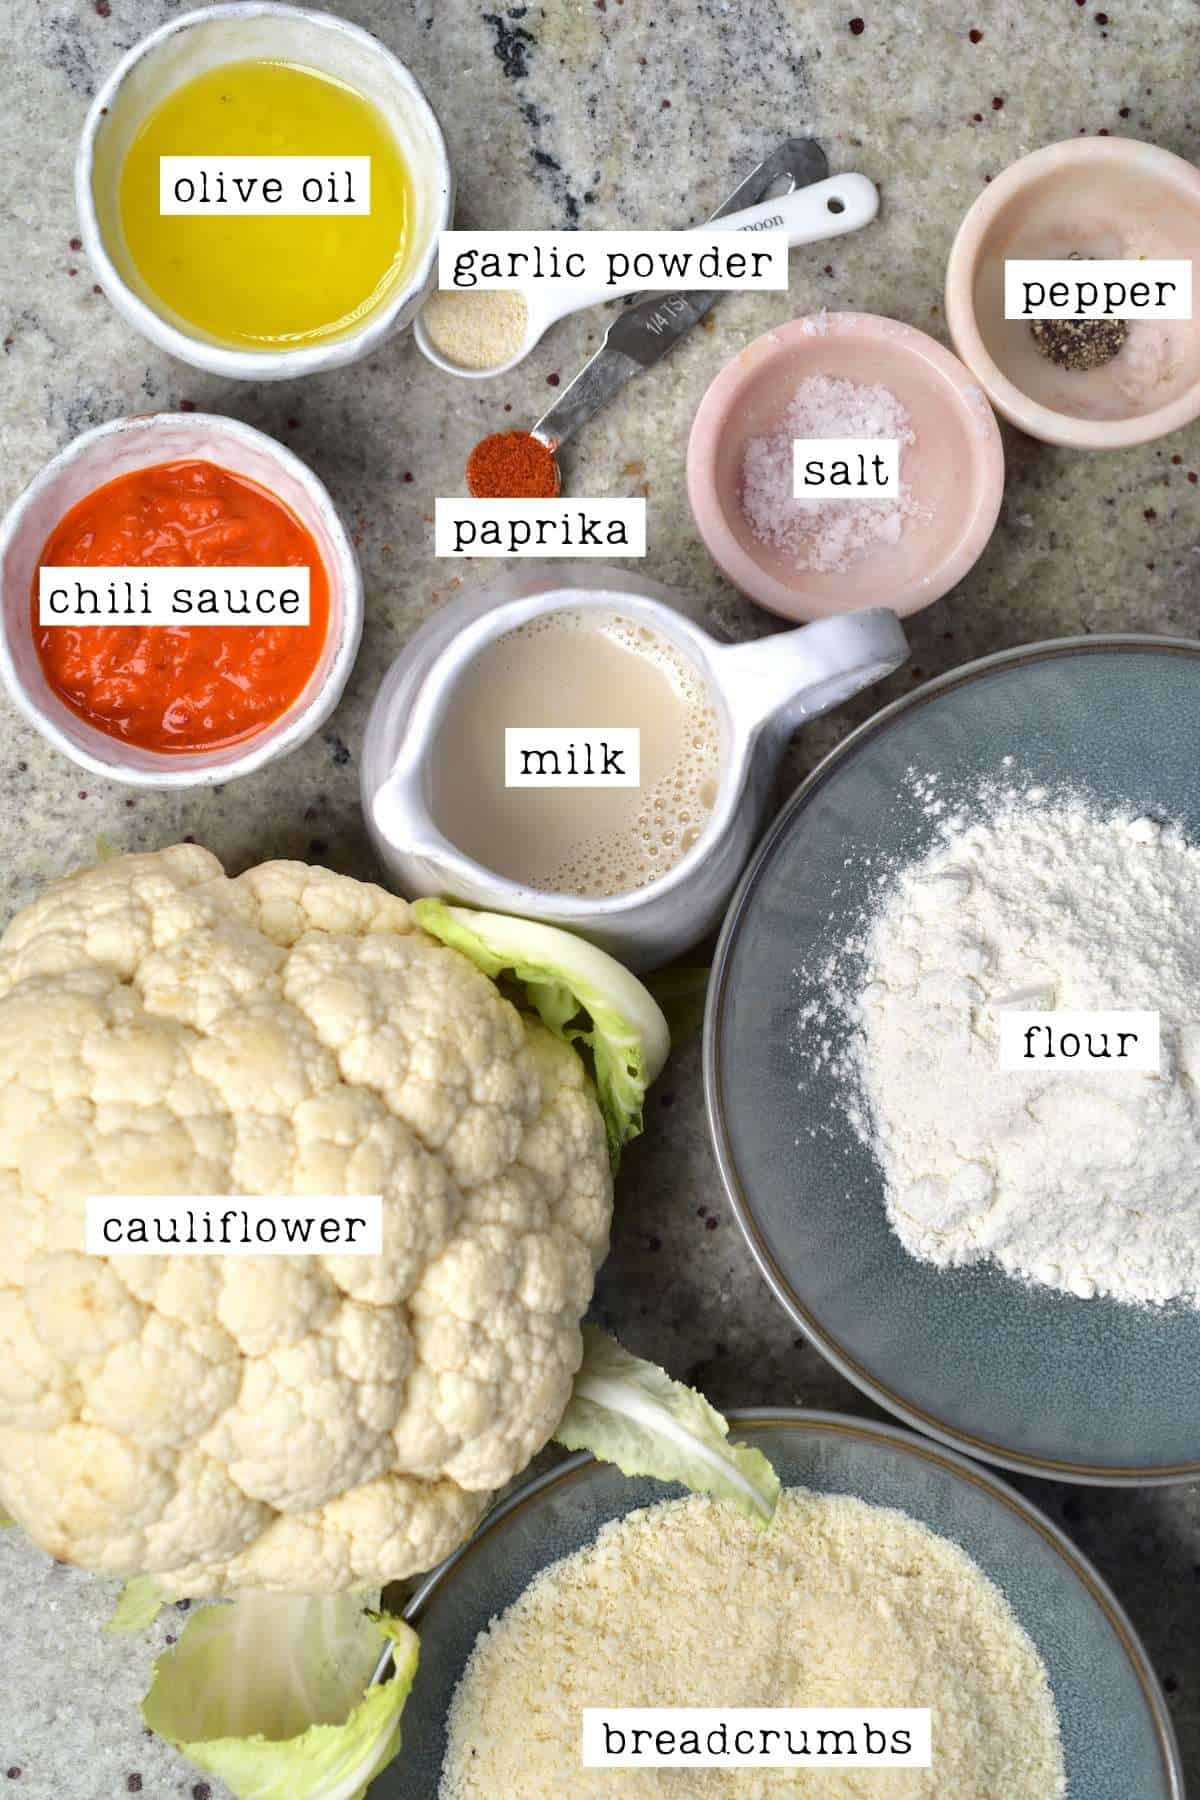 Ingredients for baked cauliflower wings